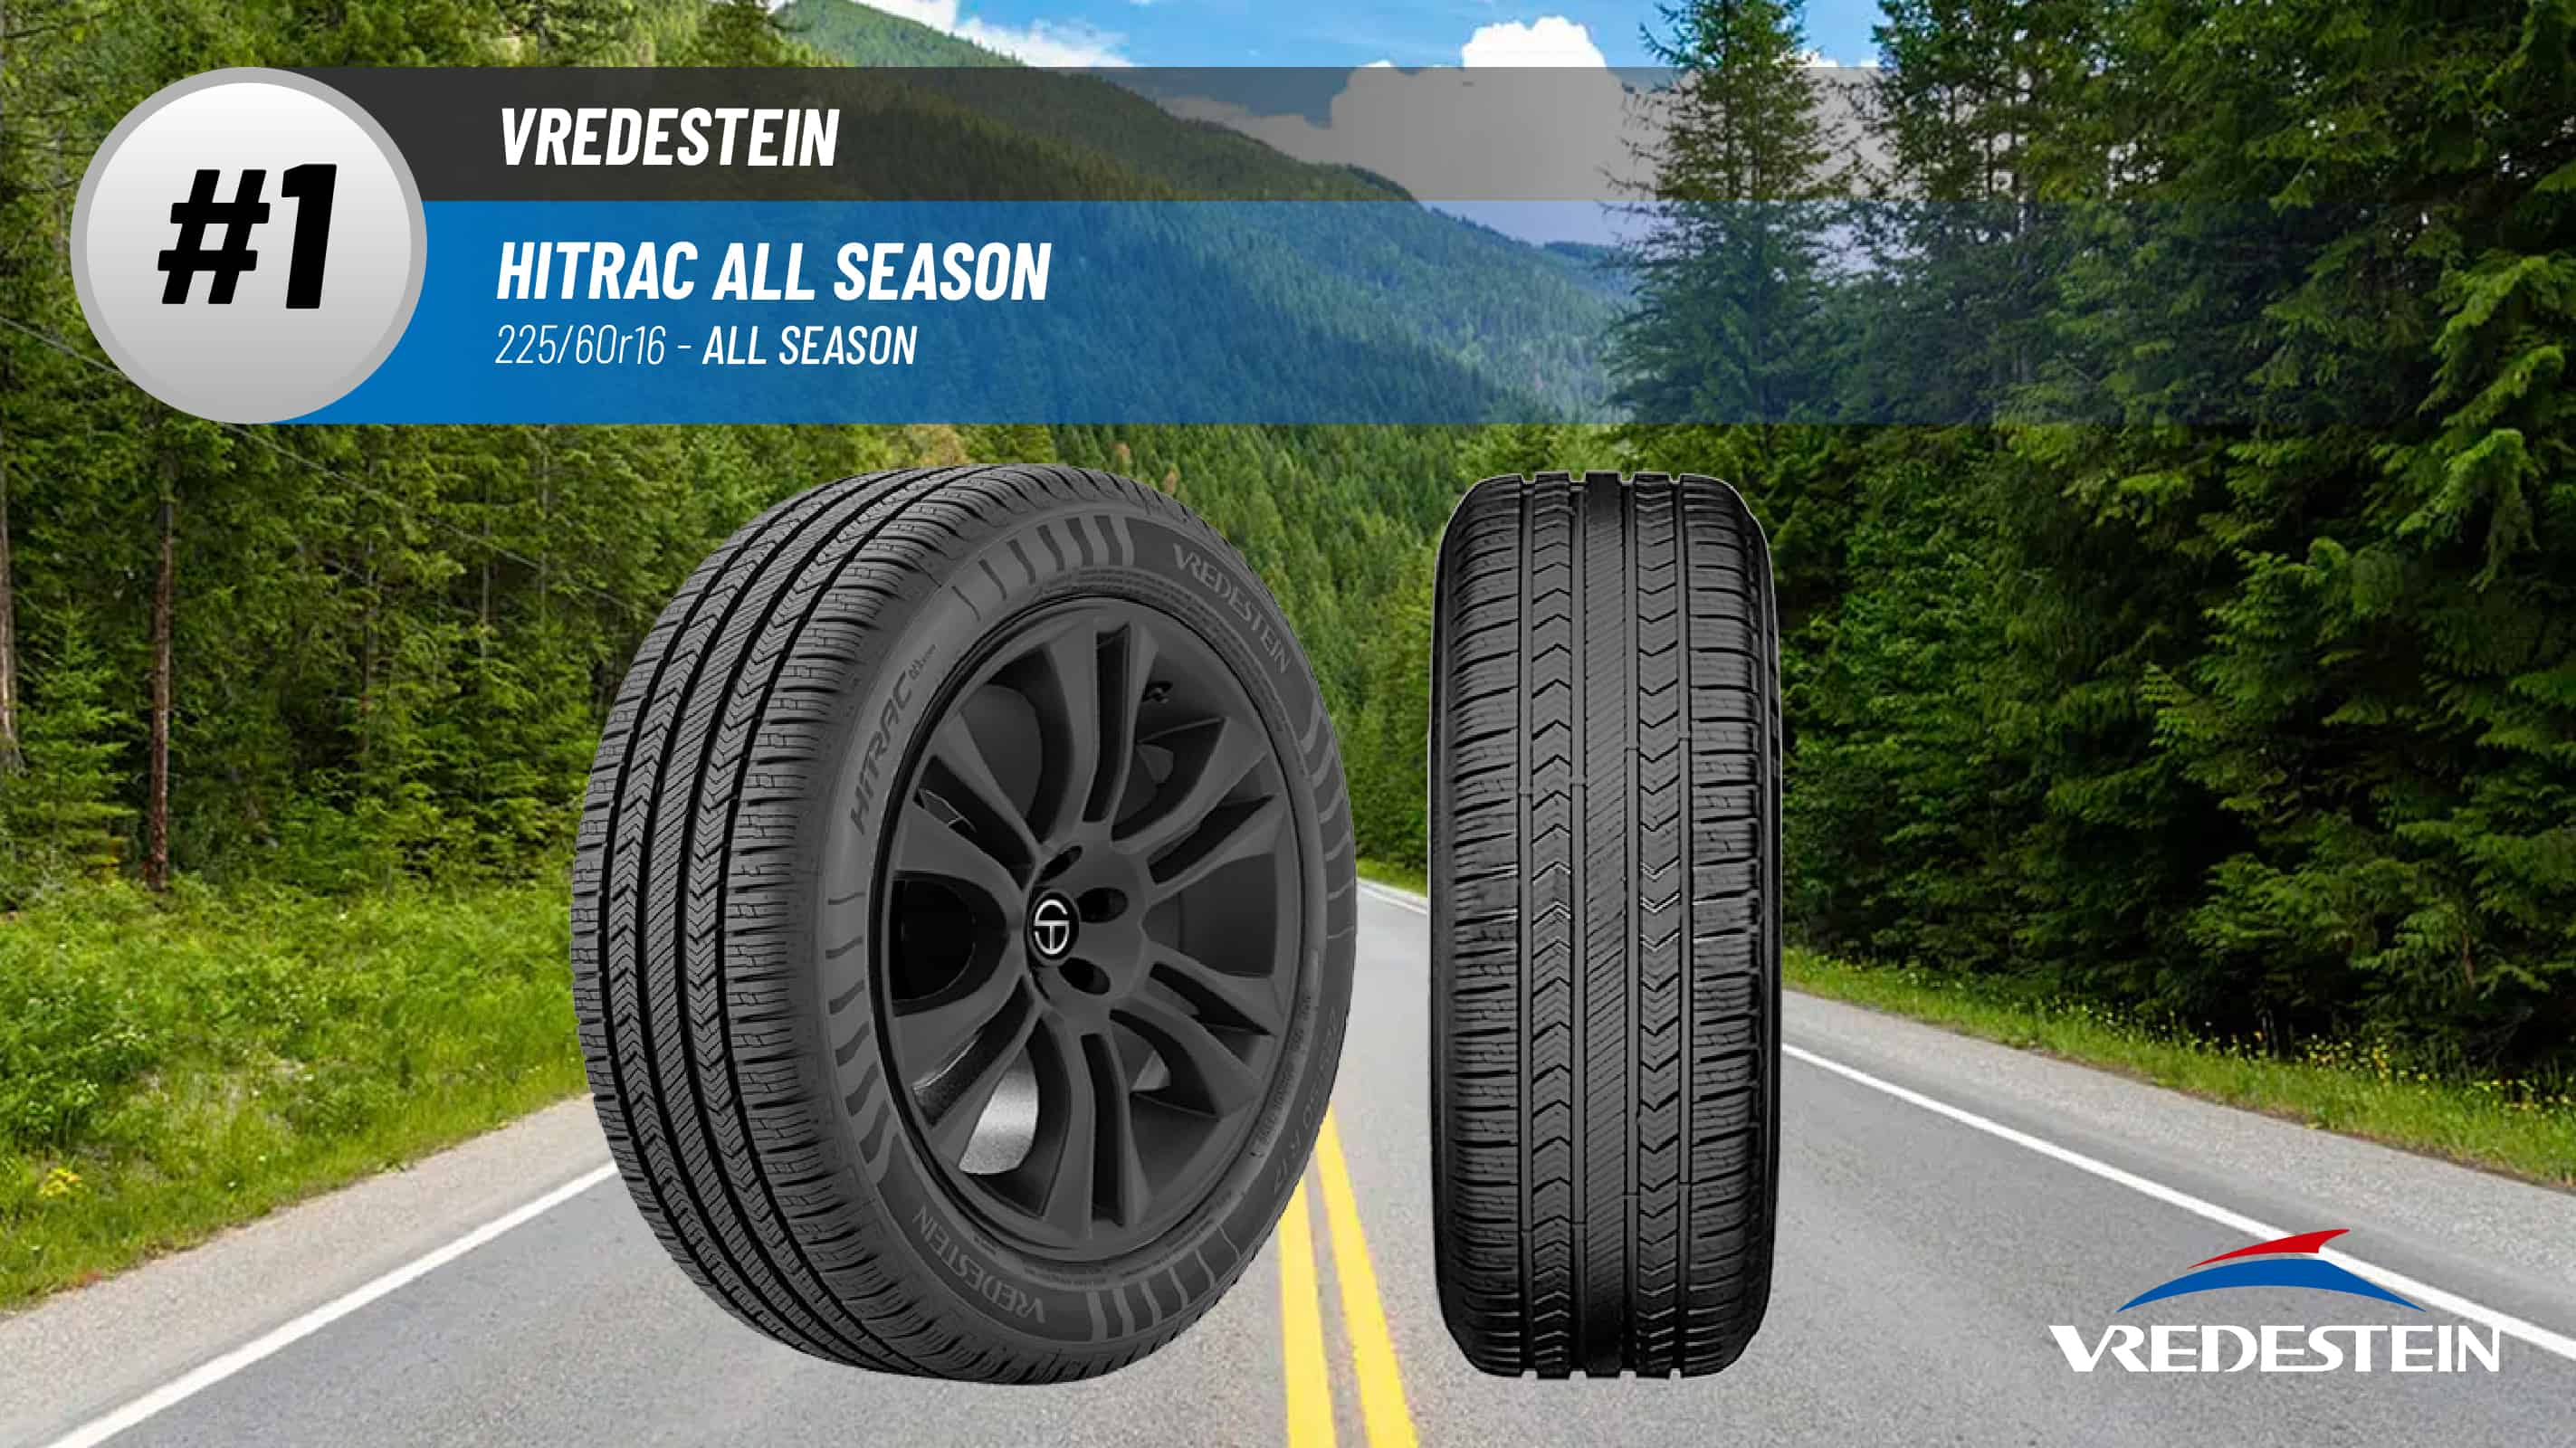 Top #1 All Season Tires: Vredestein Hitrac All Season – 225/60r16